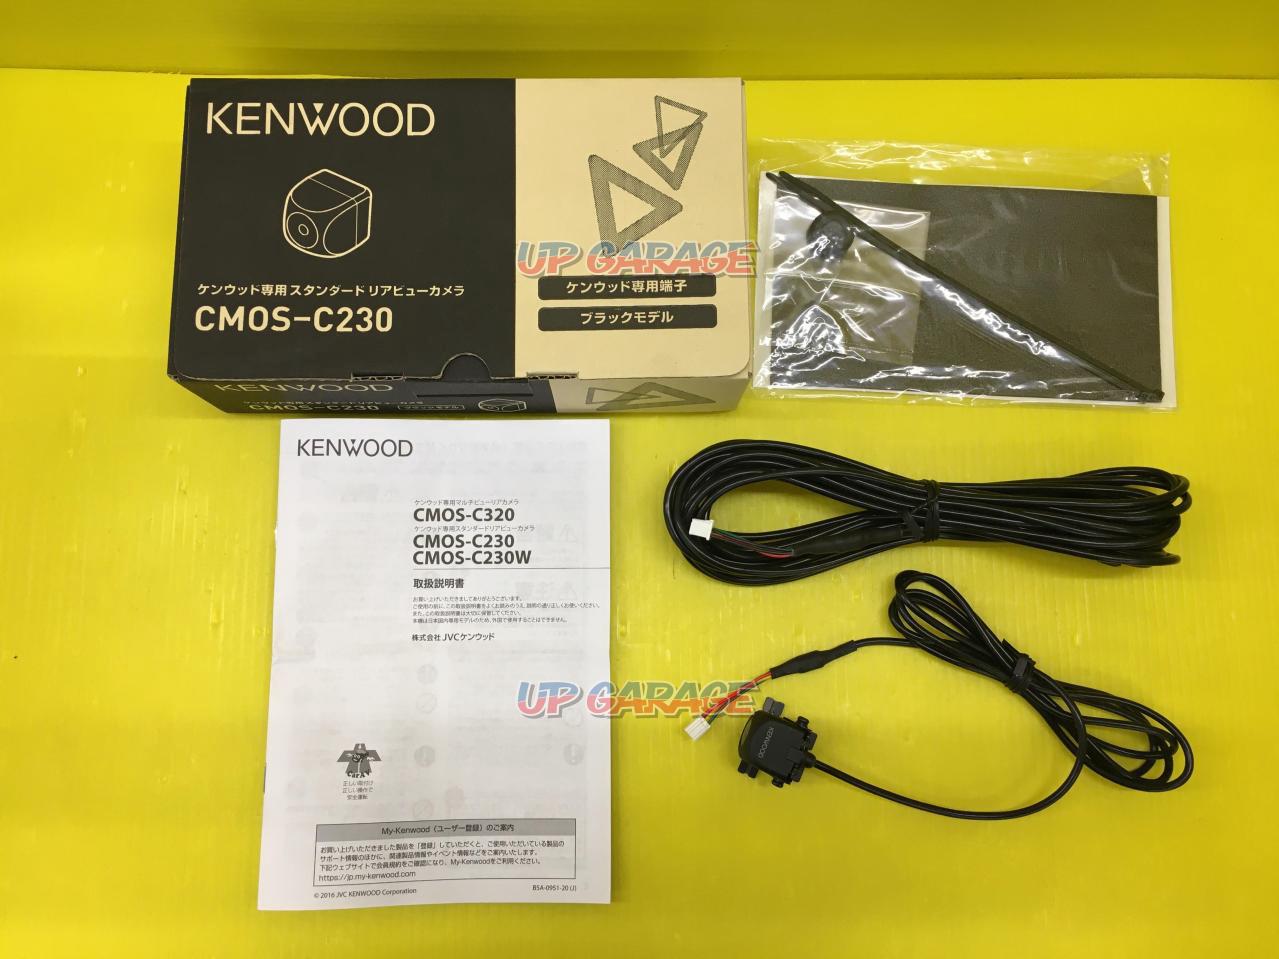 KENWOOD(ケンウッド) CMOS-C230(ブラック) | カーAVアクセサリー